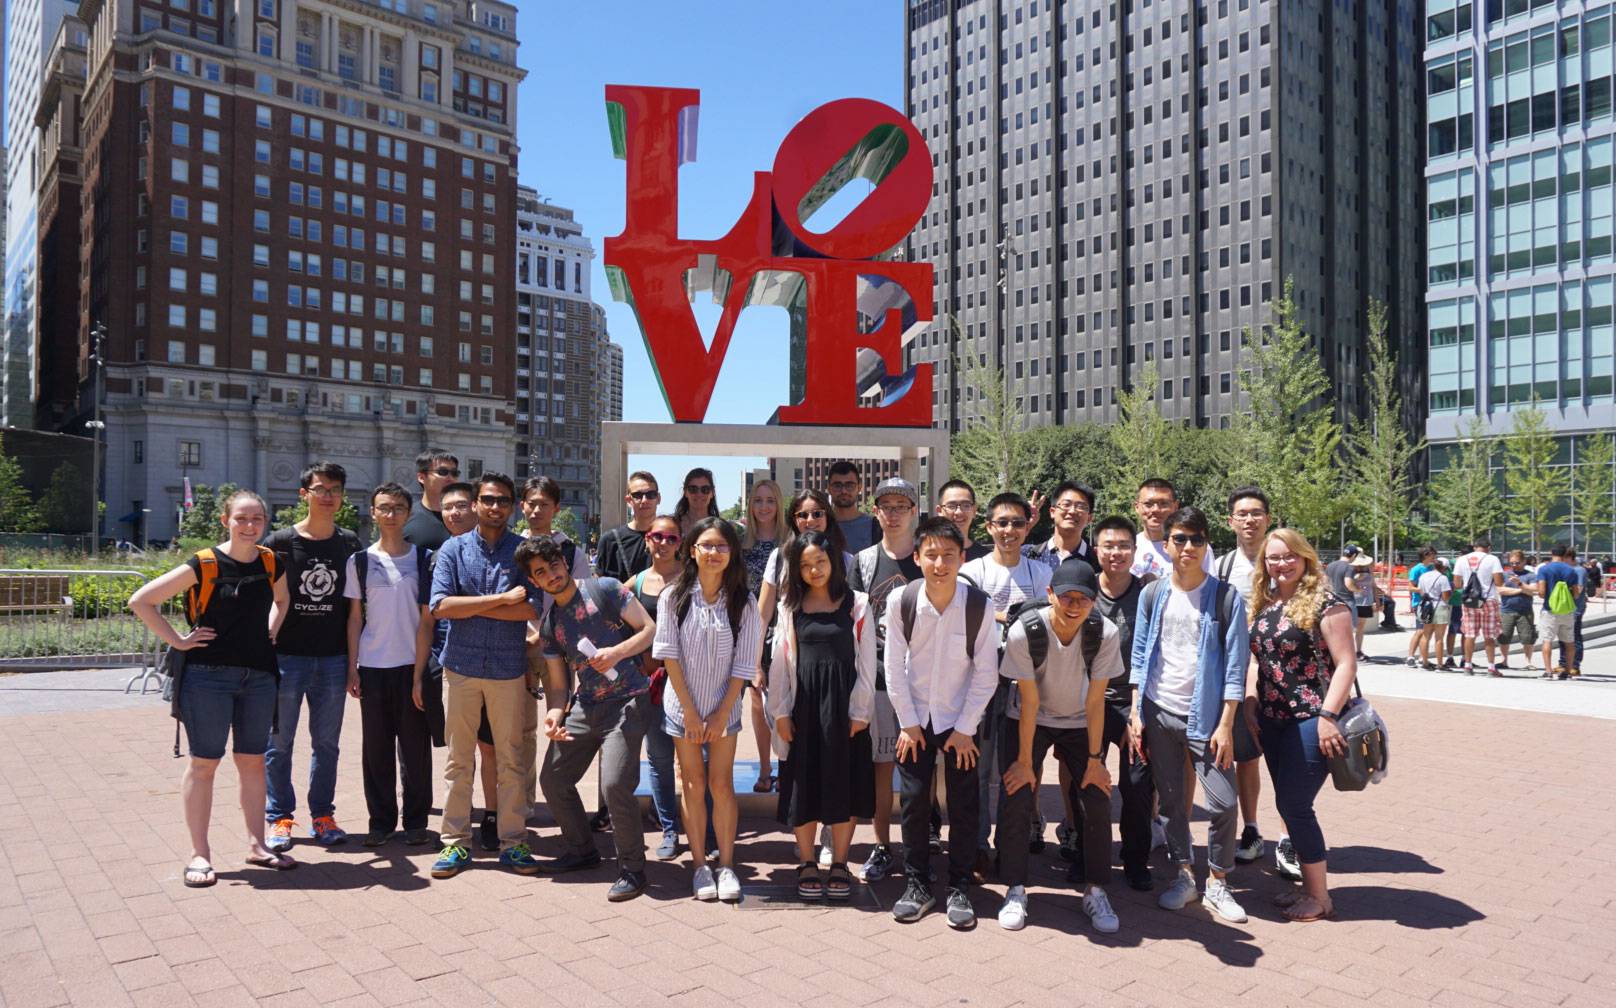 International students standing in front of LOVE statue in Philadelphia